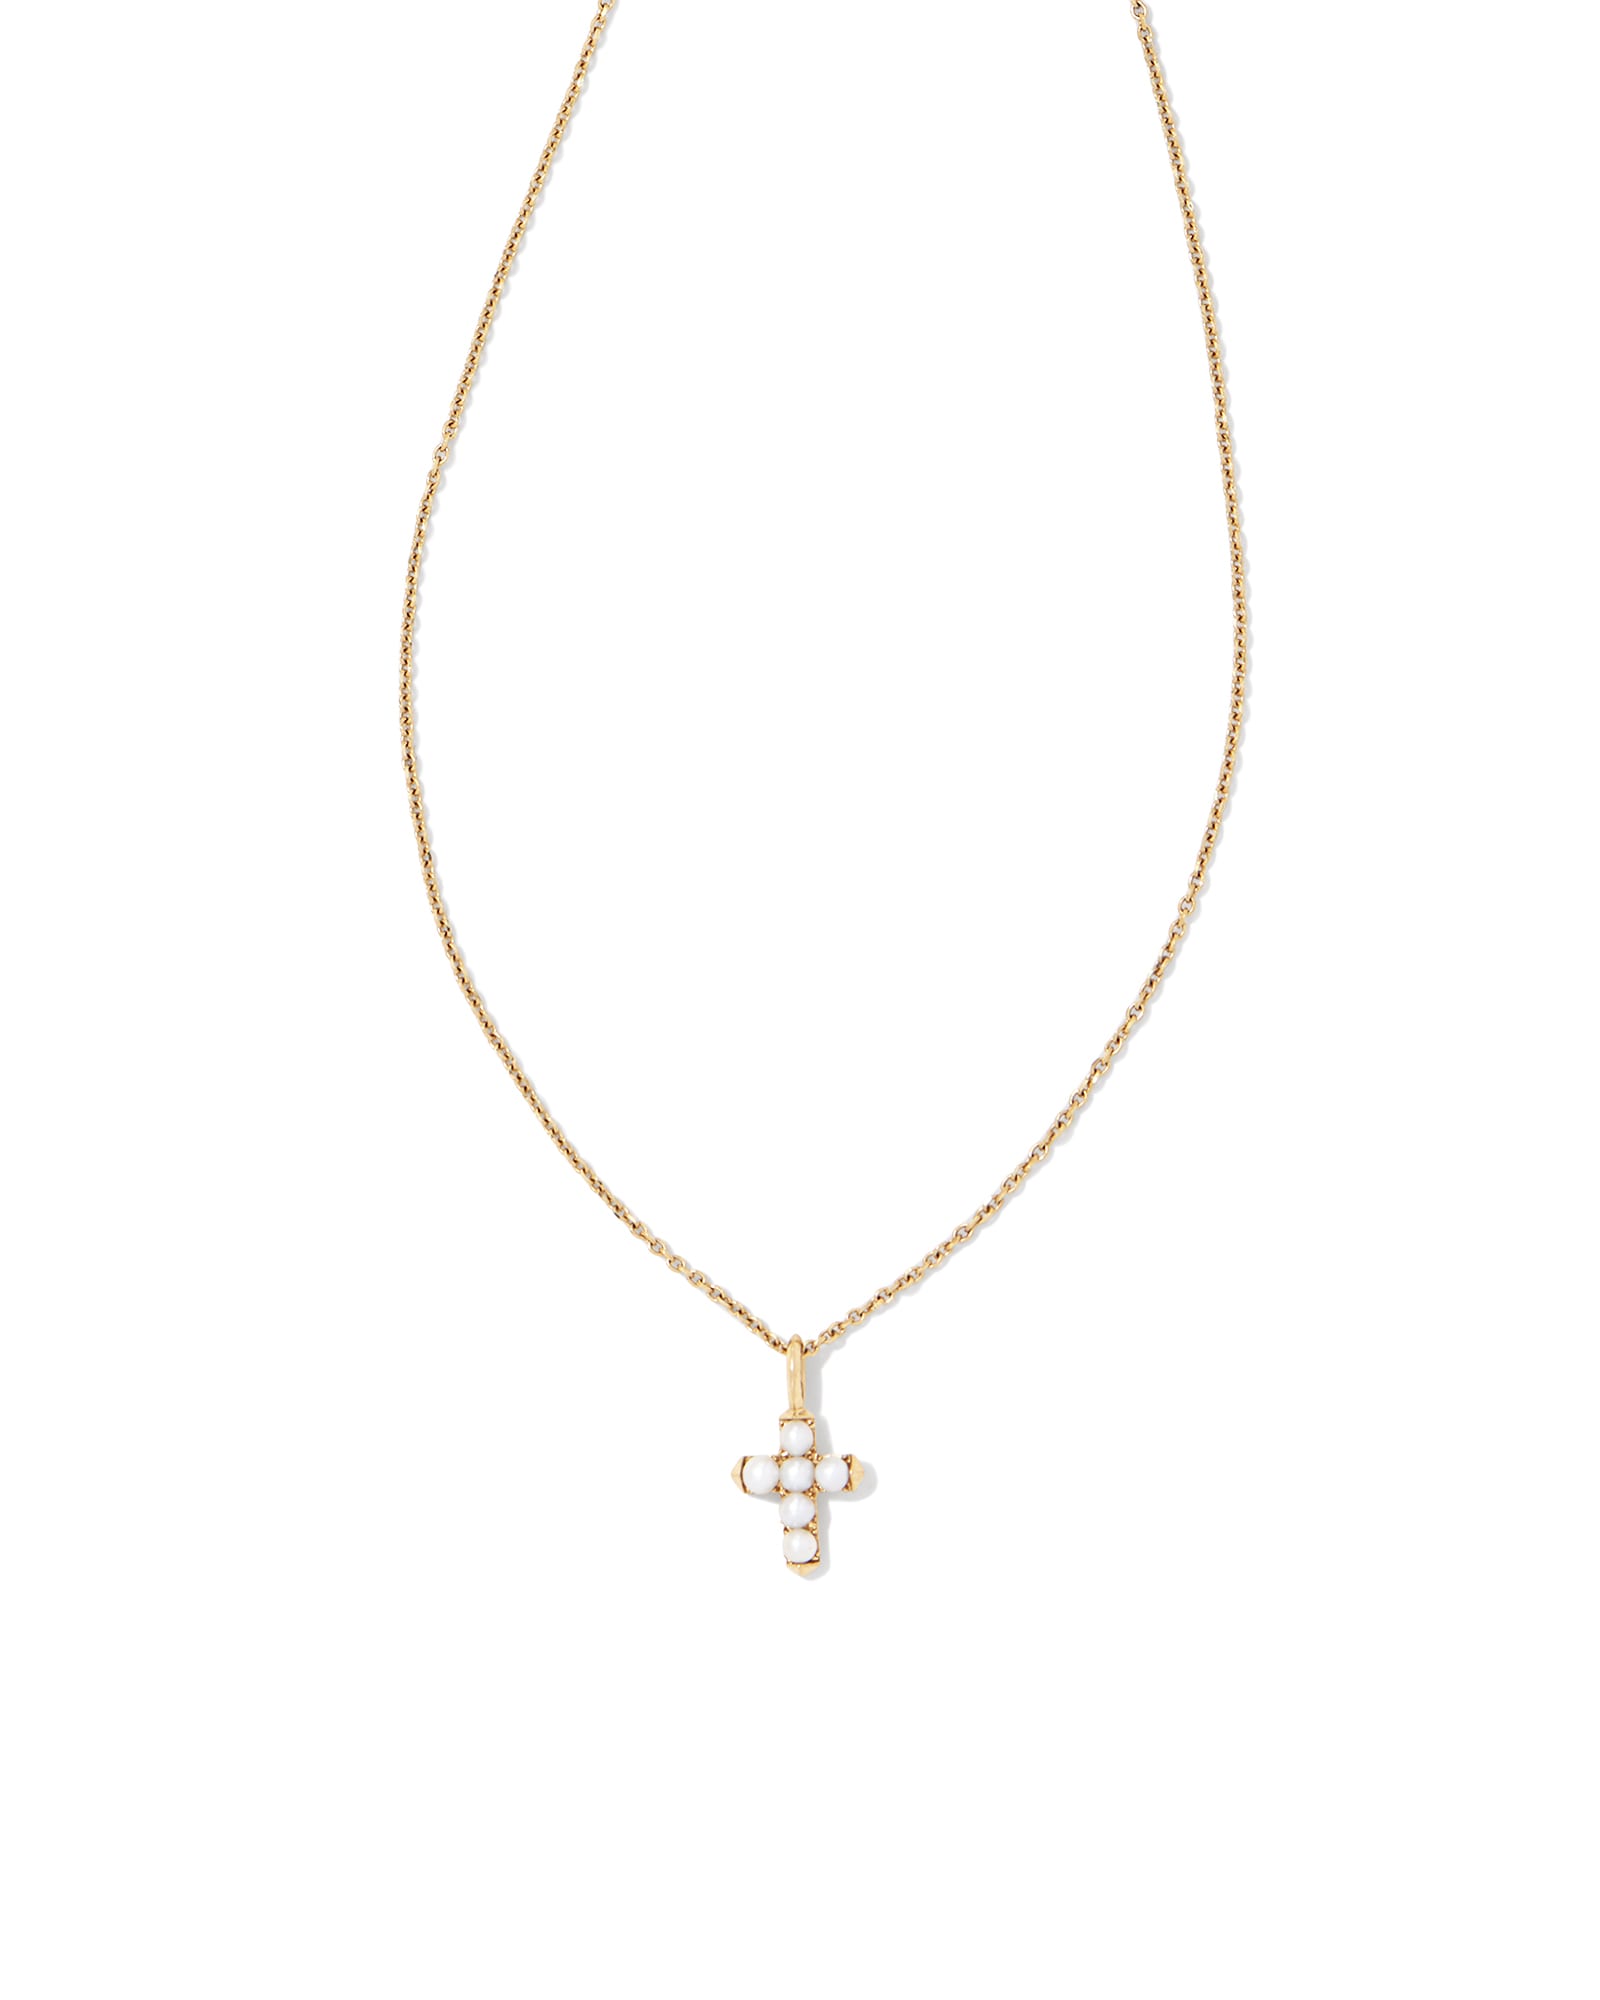 Kendra Scott Dira Pendant Necklace in 18K Gold Vermeil - Rhinestone Angel